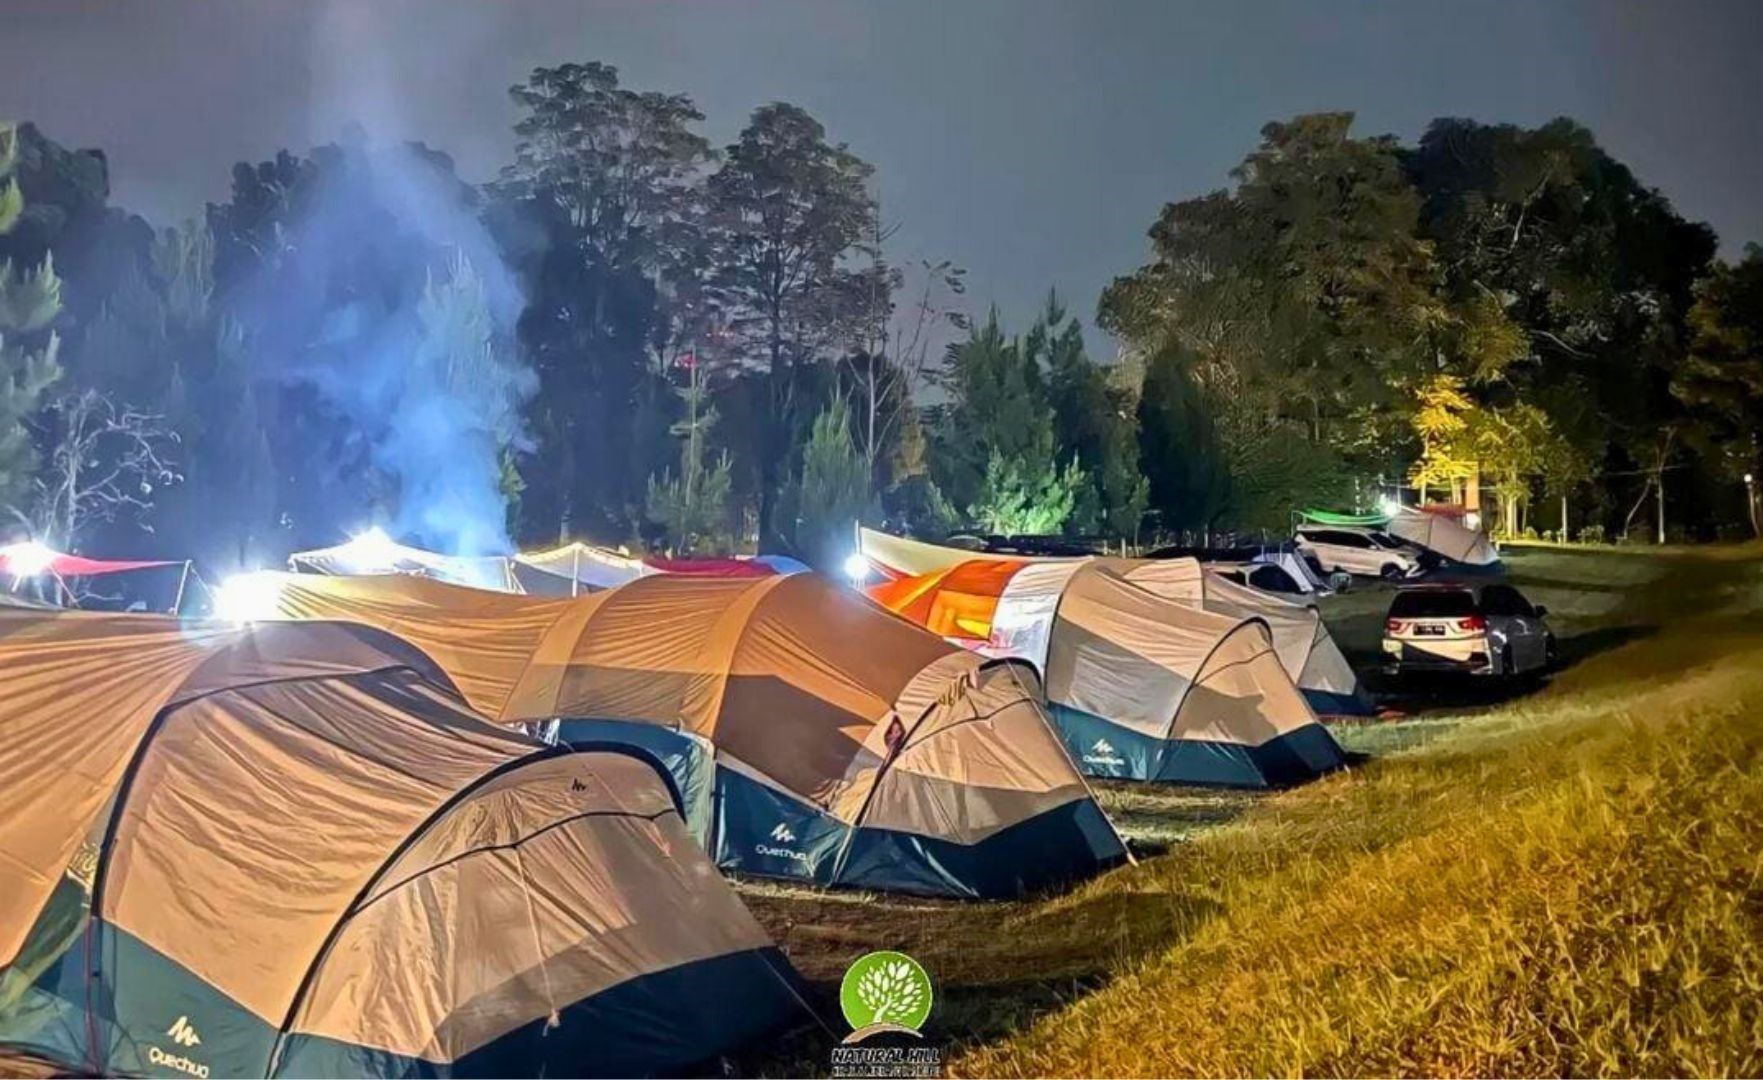 Suasana alam yang asri dan damai saat malam hari akan dirasakan saat berwisata ke Natural Hill Cisarua Lembang/ website/ Naturalhill.id